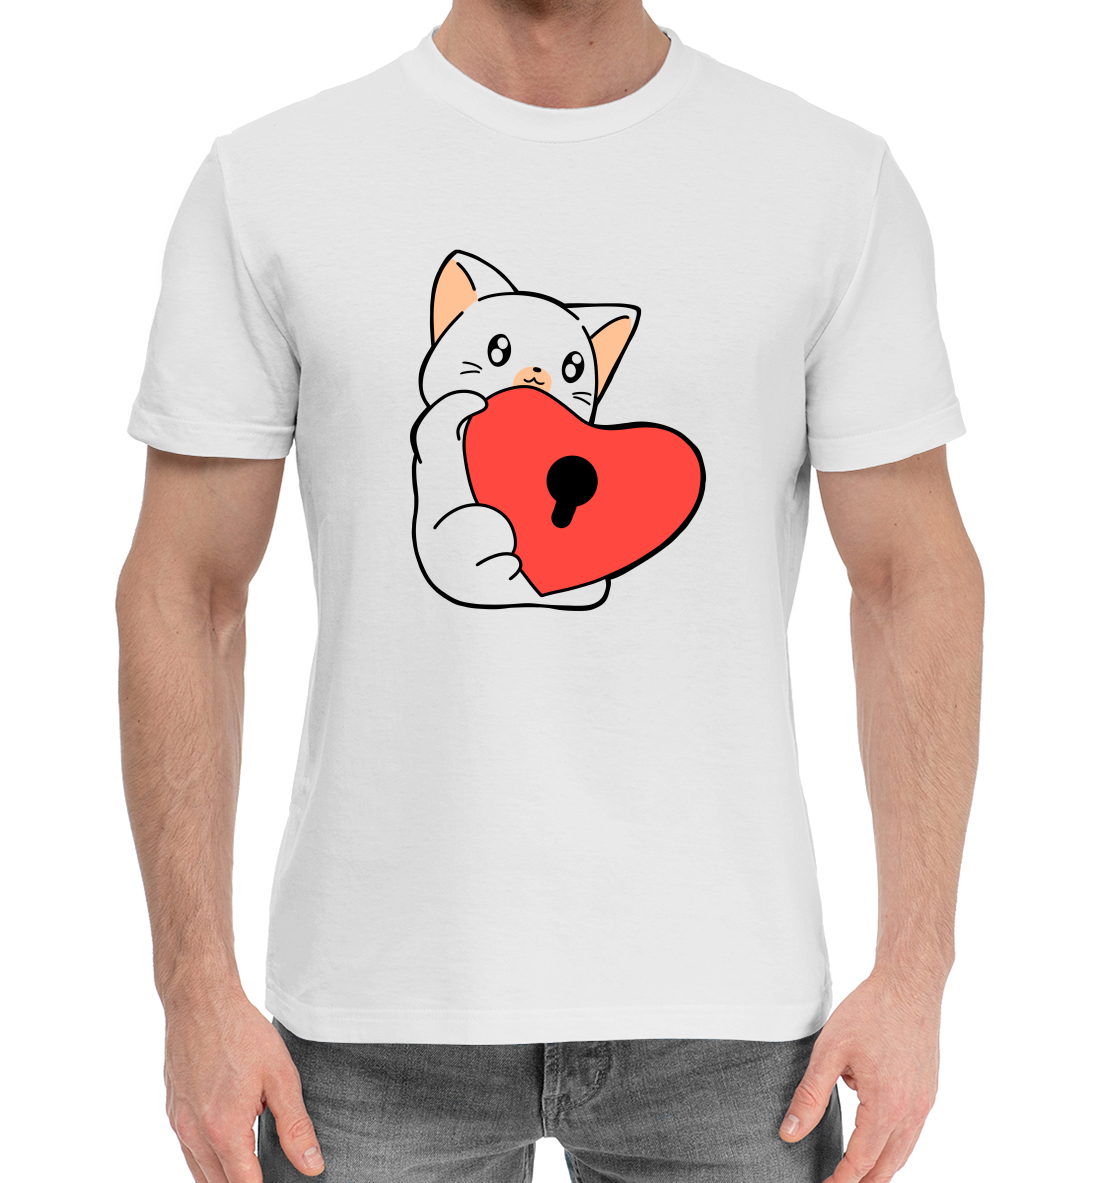 Хлопковая футболка Киса с сердечком